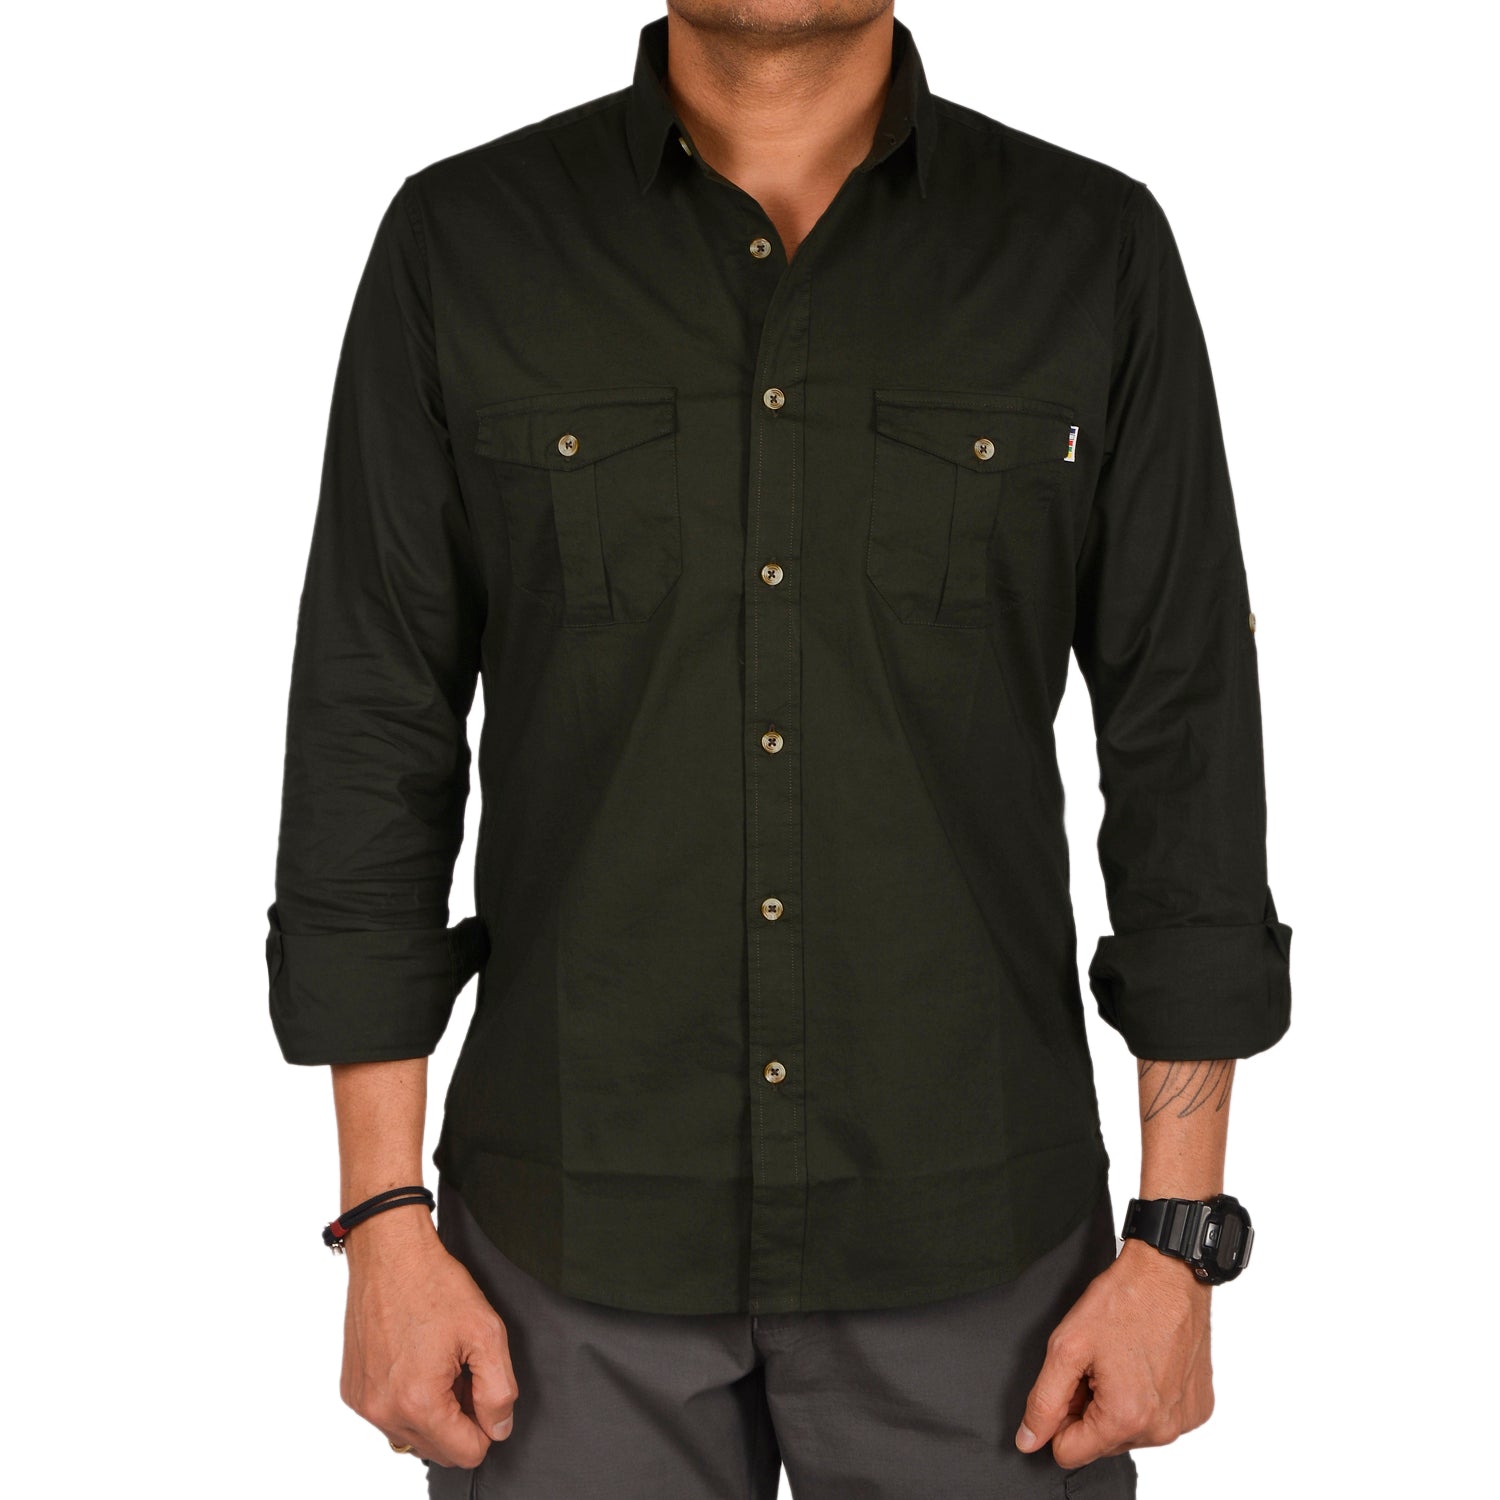 Buy Gokyo Corbett Cargo Full Sleeve Shirt Olive | Shirts at Gokyo Outdoor Clothing & Gear